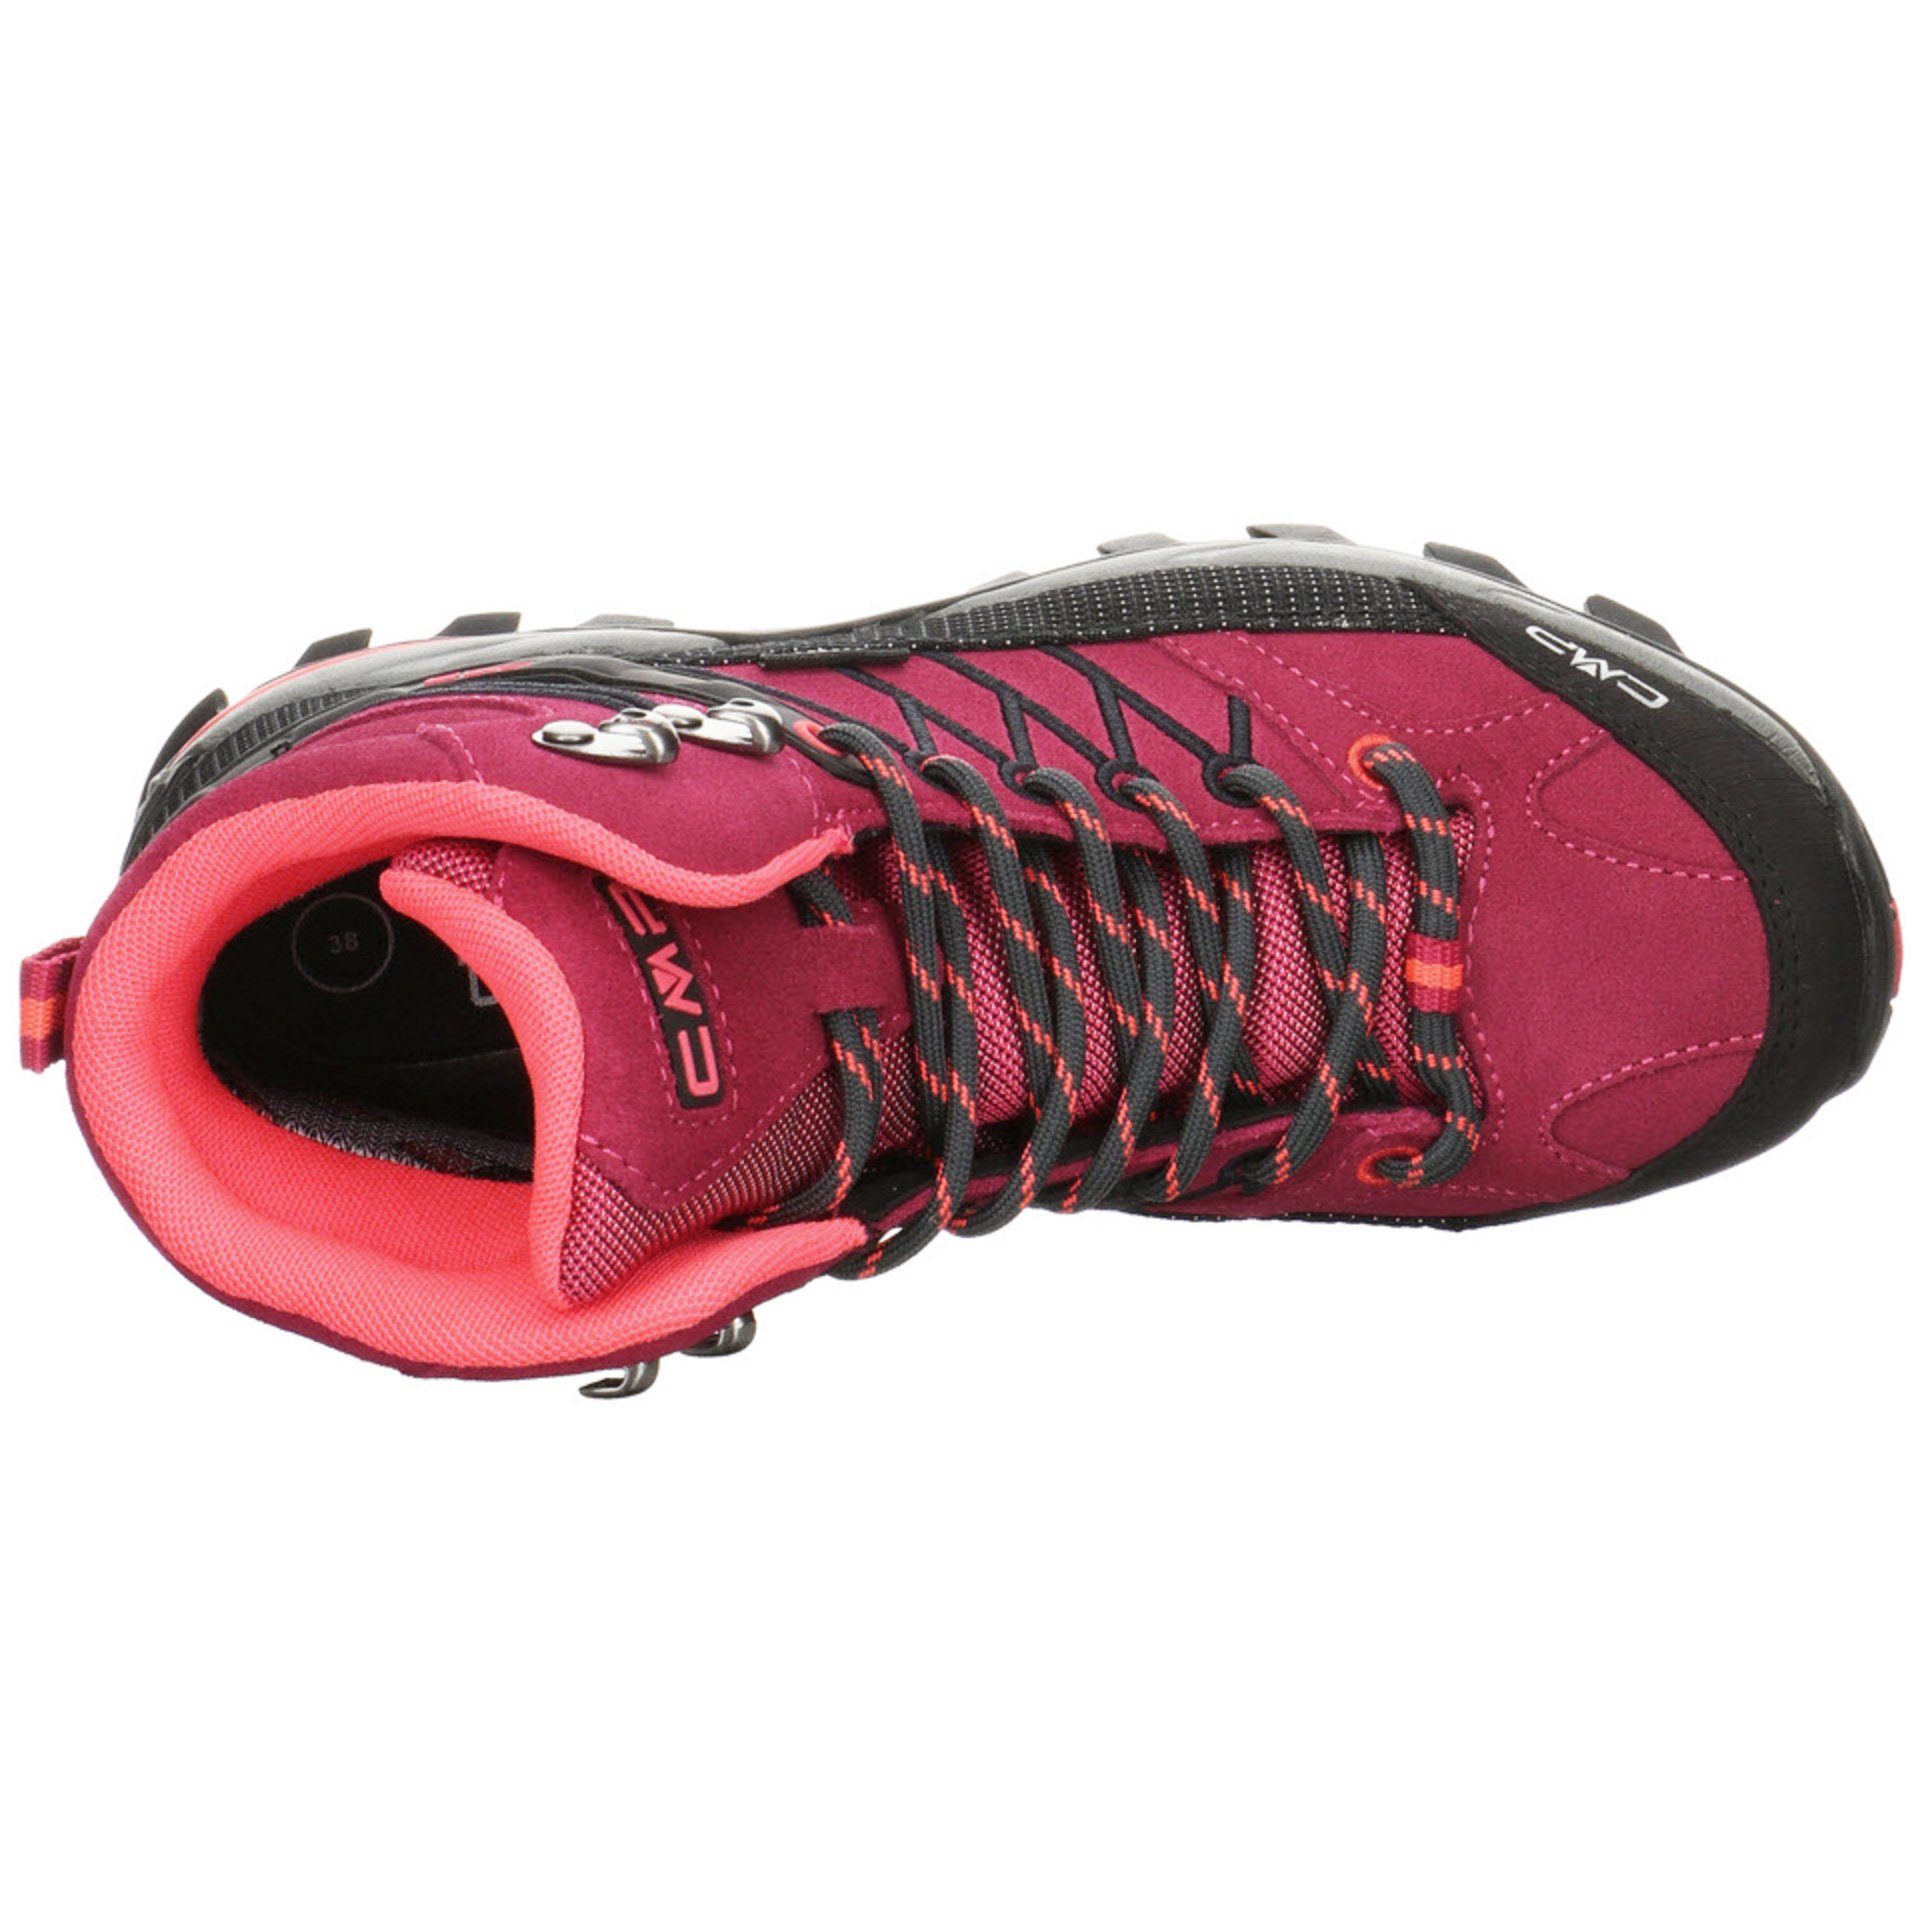 MAGENTA-ANTRACITE Leder-/Textilkombination Mid Rigel Damen Outdoorschuh Outdoor Outdoorschuh CMP Schuhe